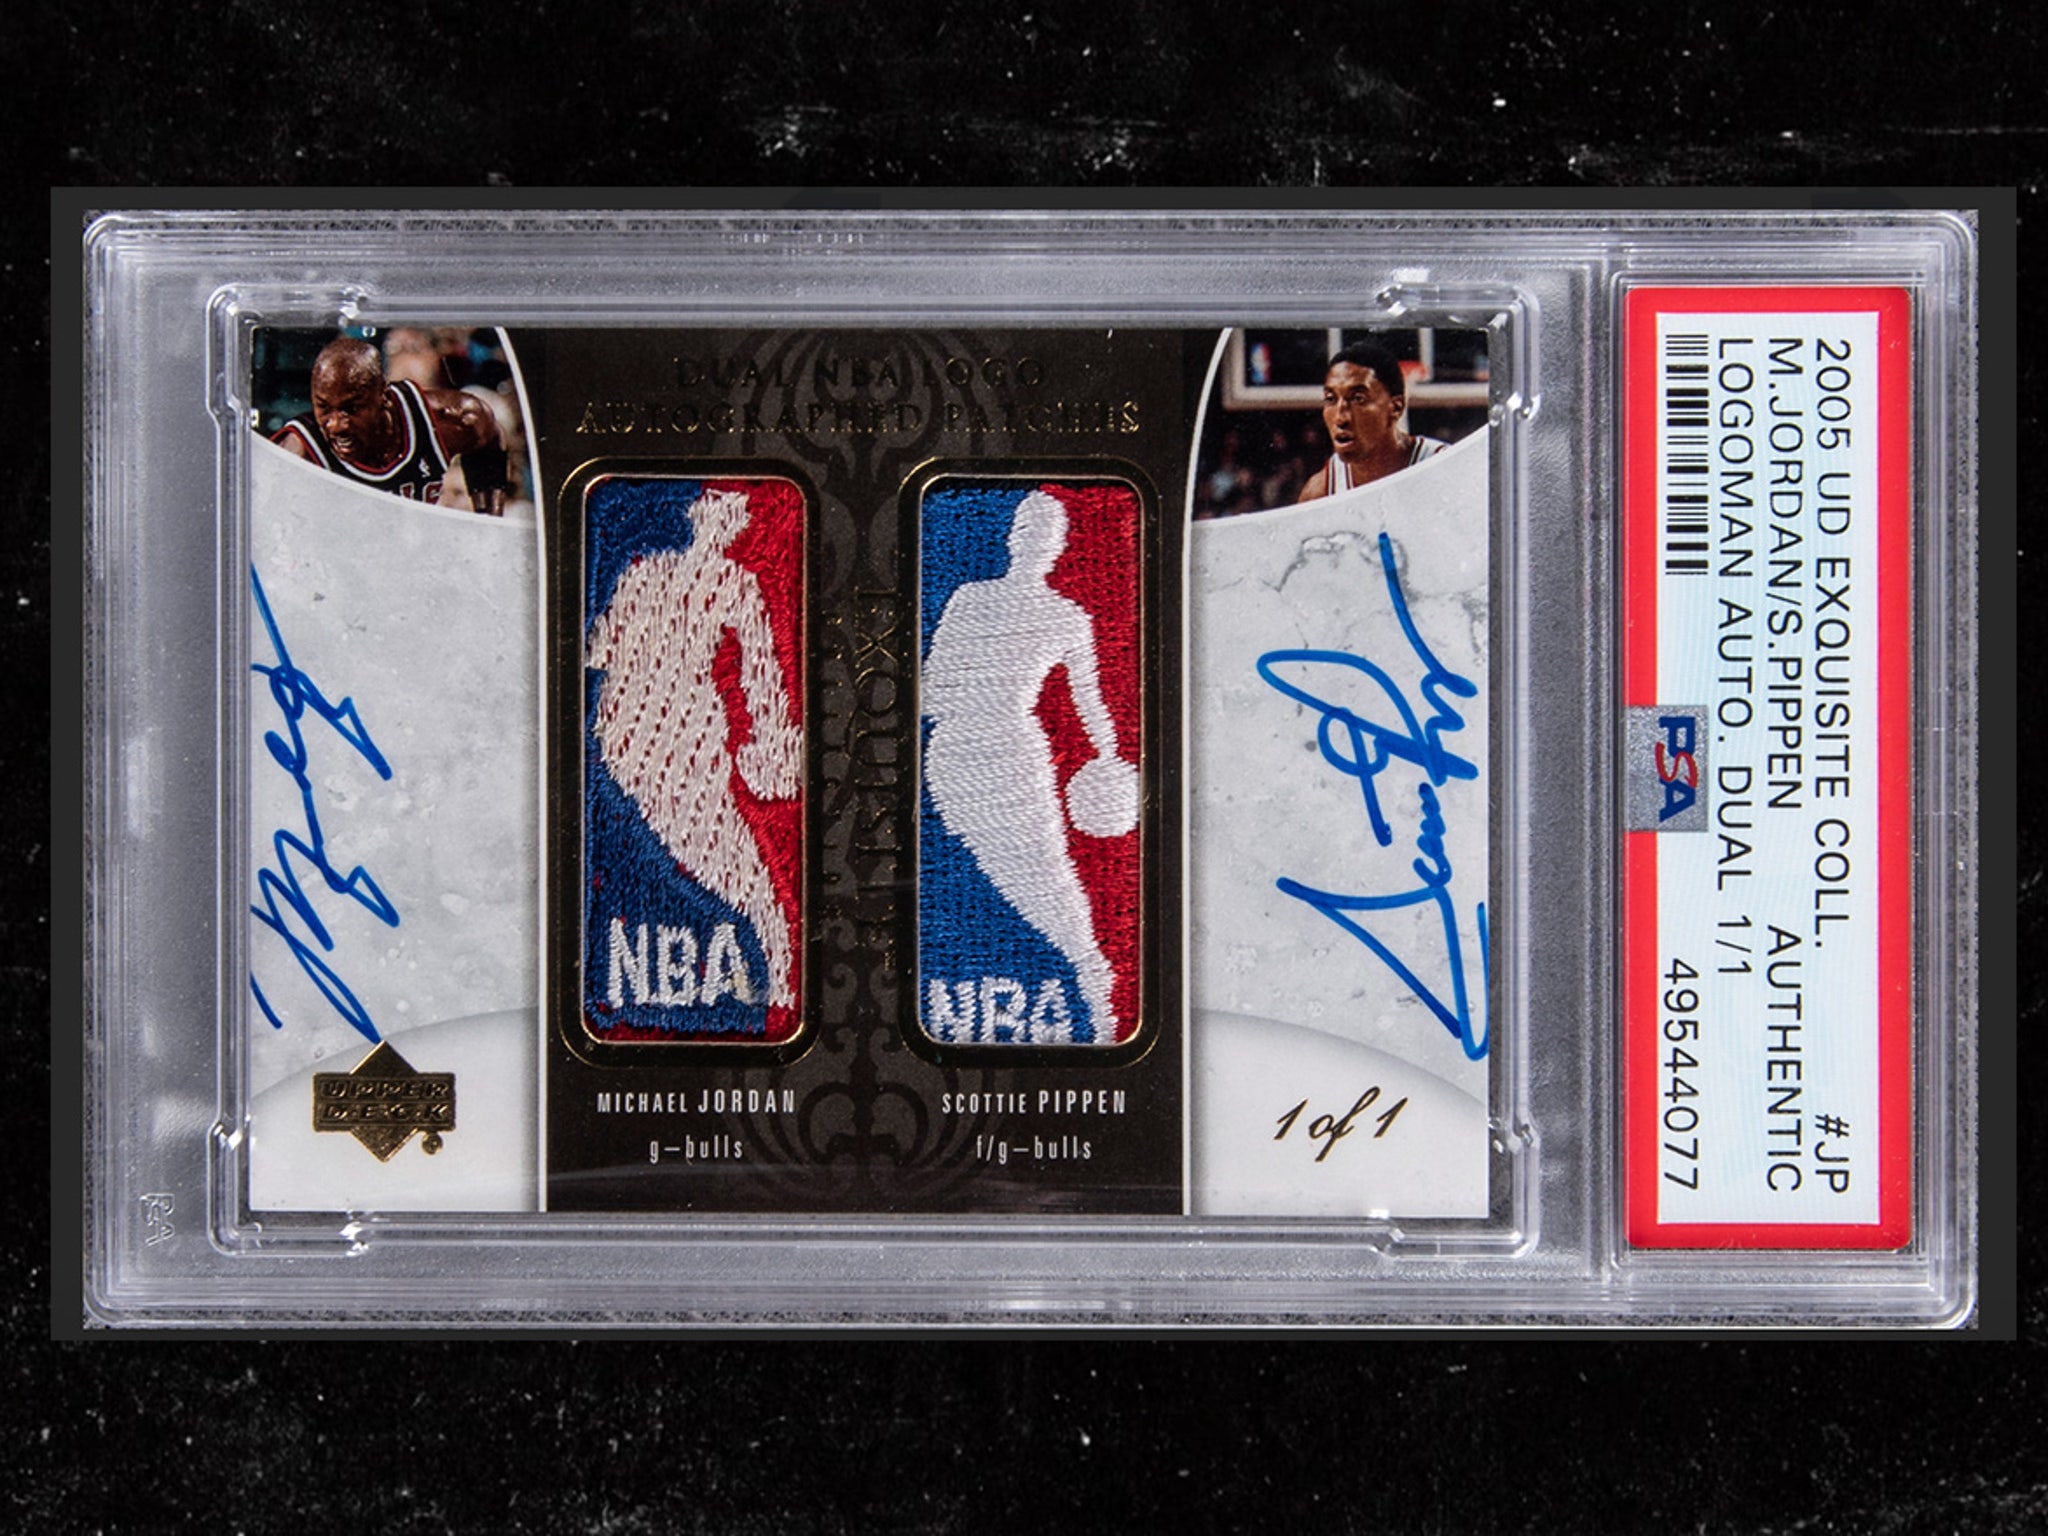 Michael Jordan & Scottie Pippen Signed Super-Rare Basketball Card